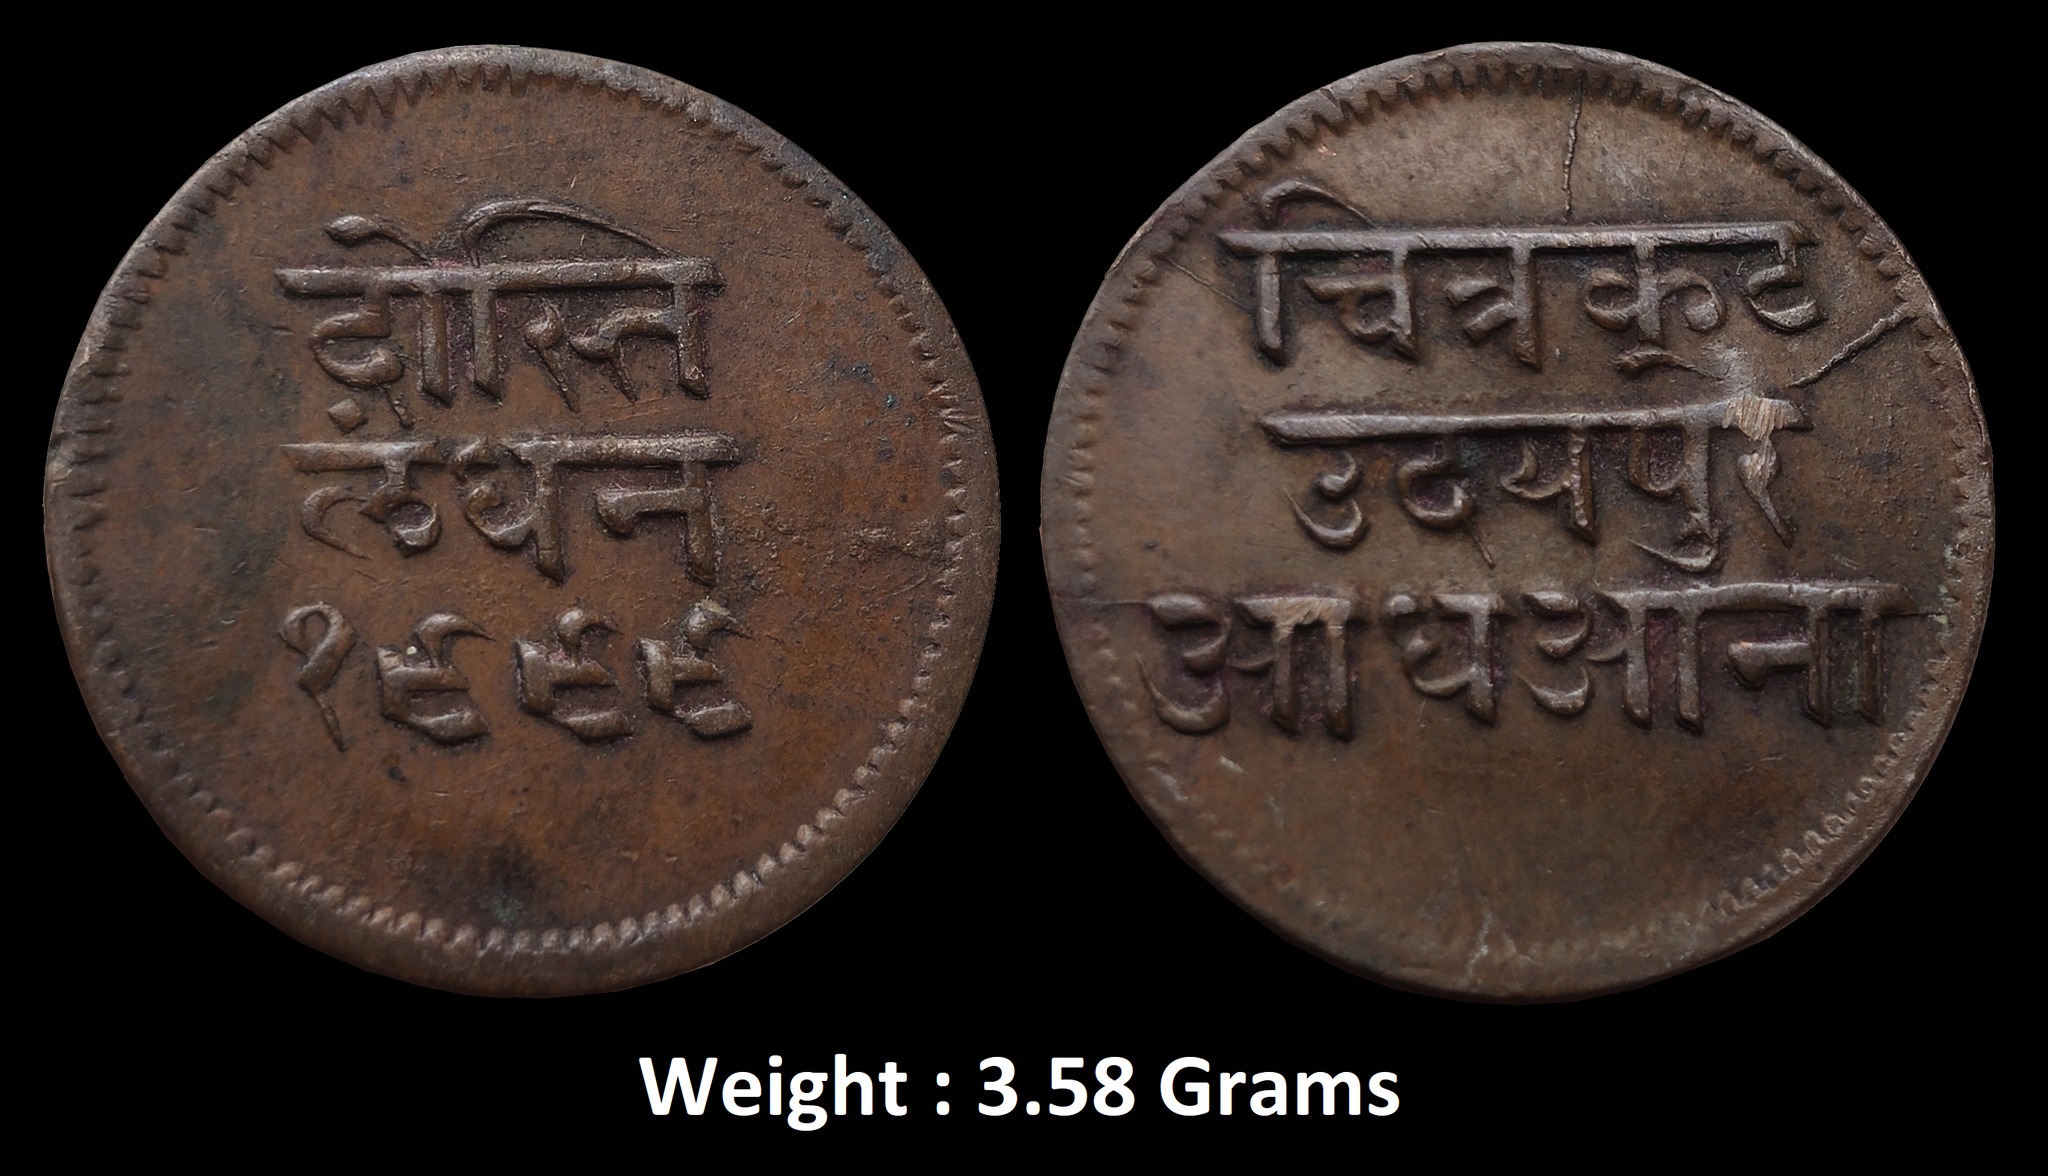 Mewar State ; Bhopal Singh (1930-1948) ; ½ Anna (1⁄32)
1999 (1942) Vikram Samvat ; Scarce
Obv : ( चित्रकूट उदयपुर आध आना )
Rev : दोस्ती लंधन ૧૯૯૯